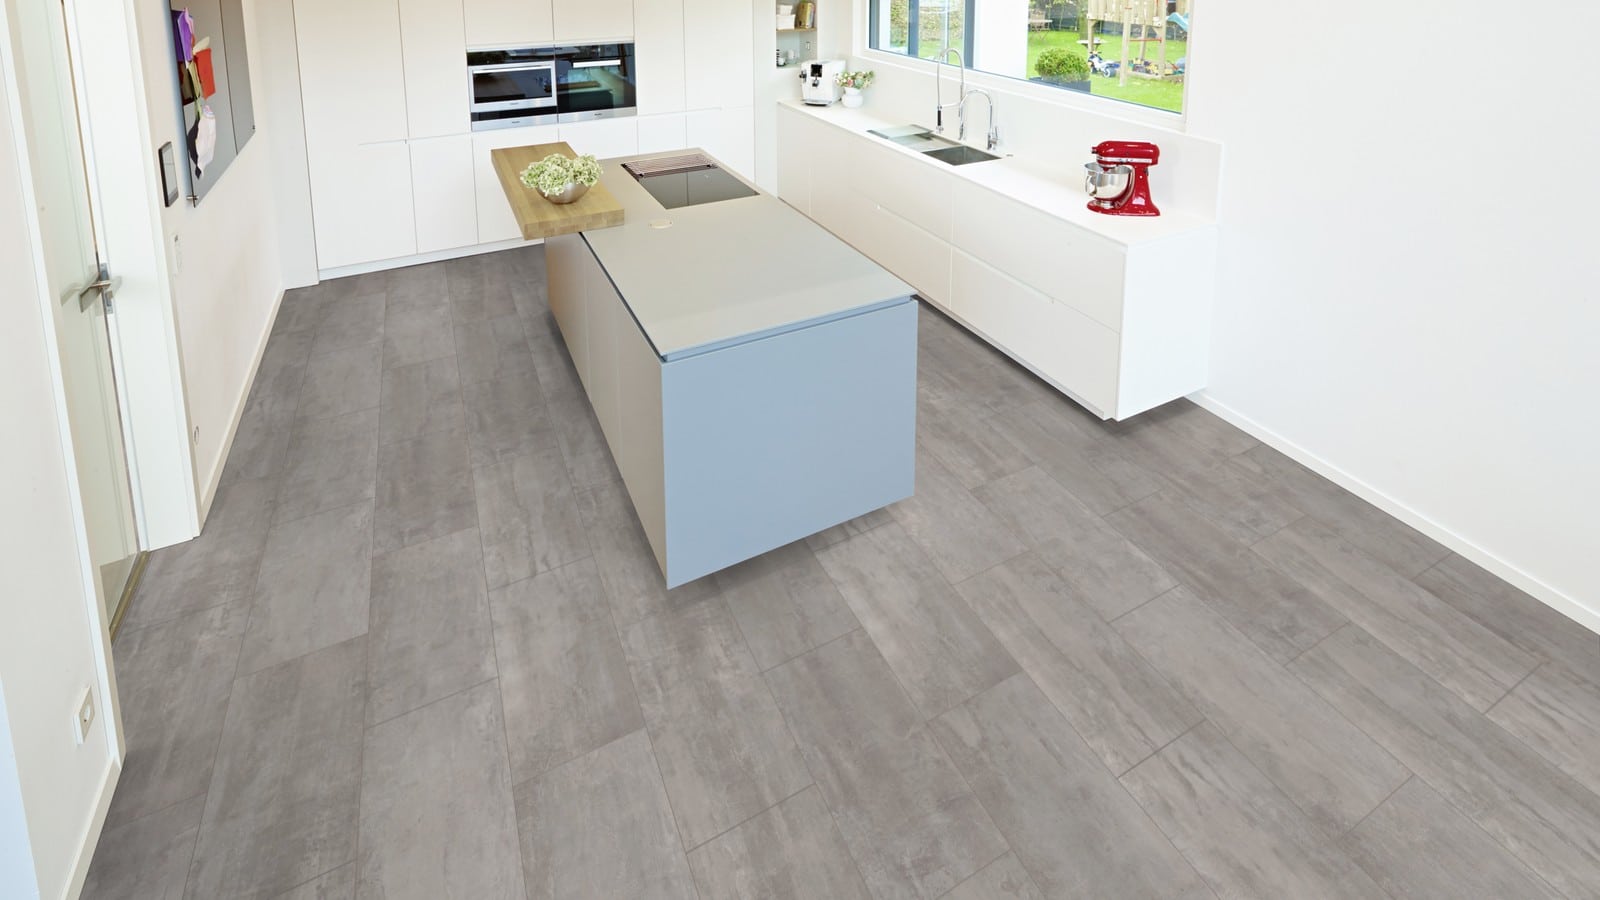 Cement Look Light Grey Laminate Tile, Grey Laminate Flooring In Kitchen